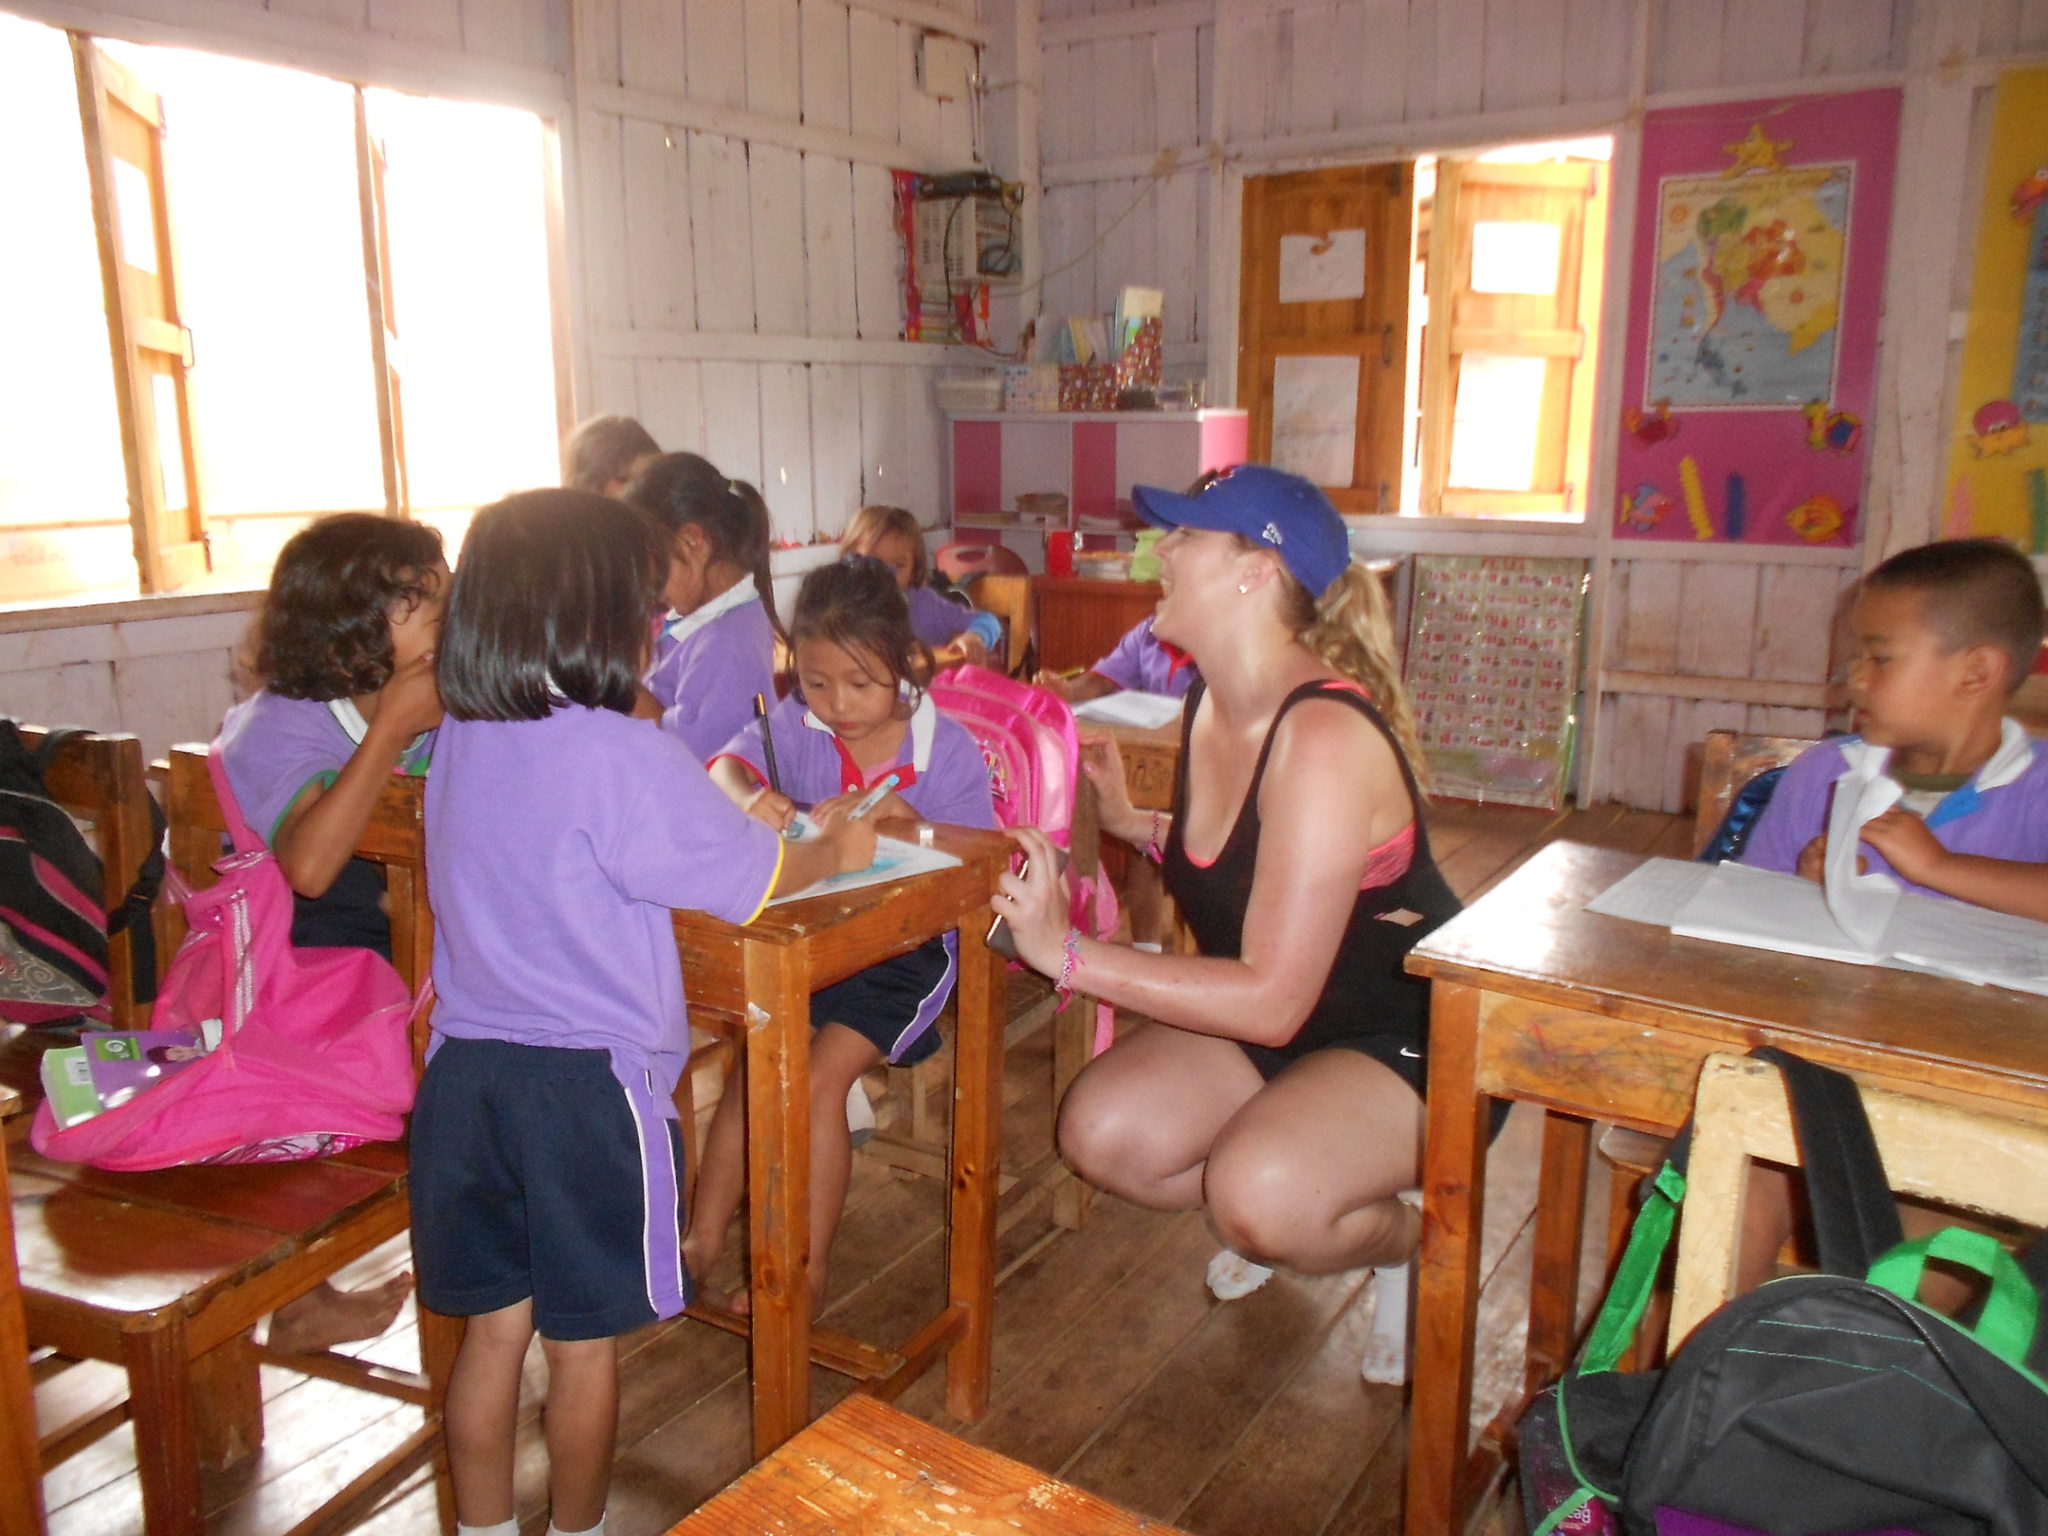 Visiting Karen tribe school